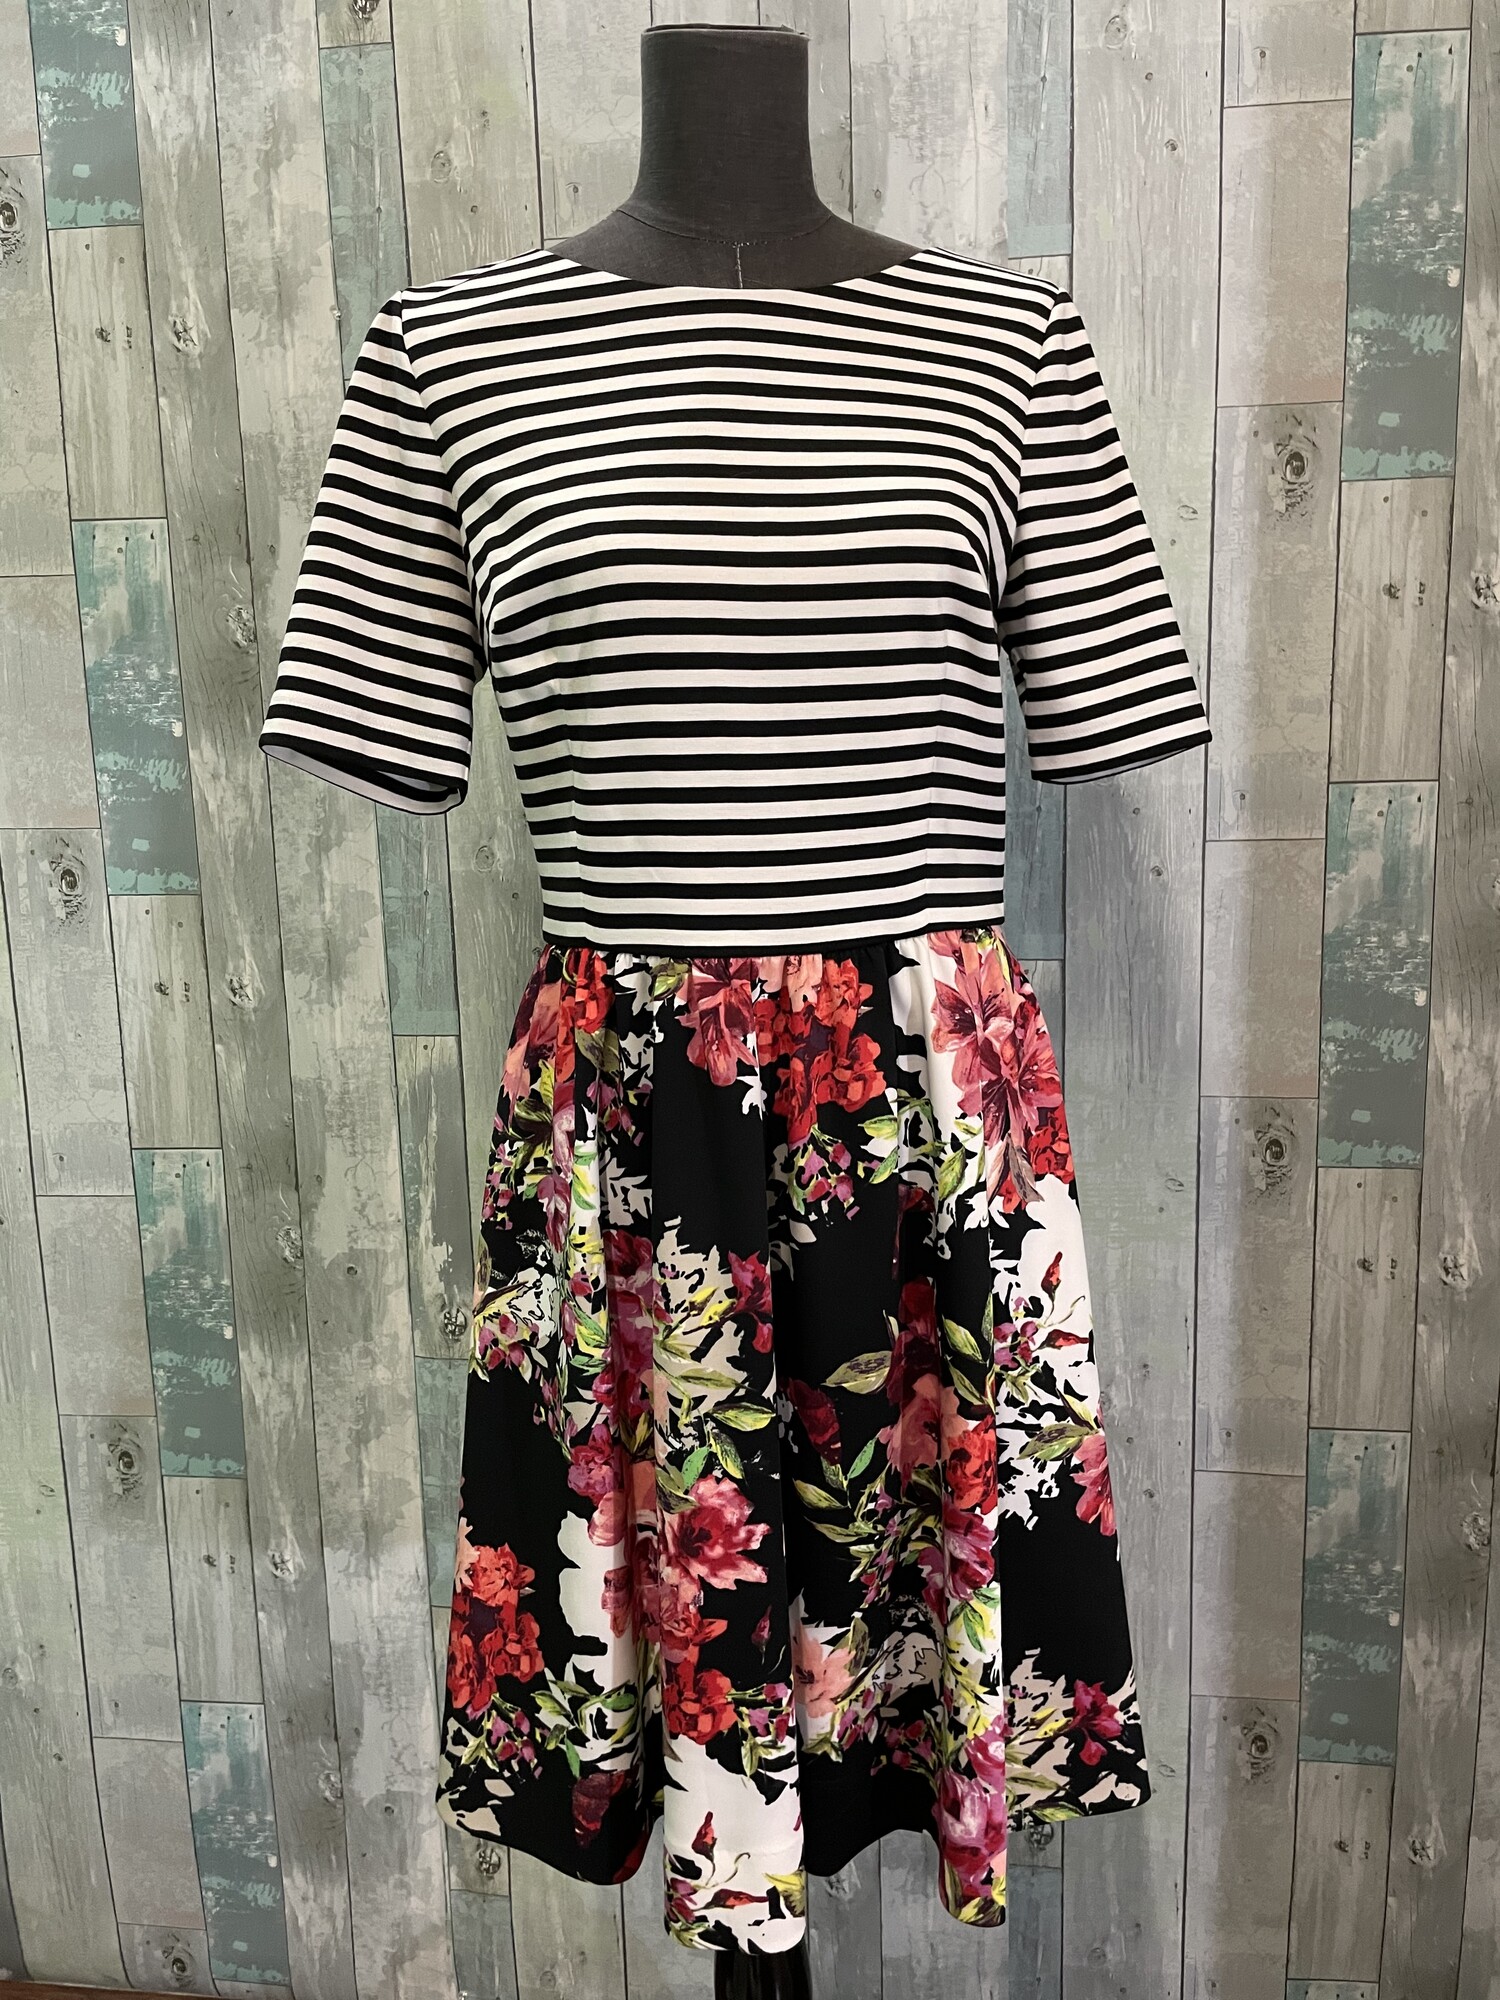 Jessica Howard Striped & Floral Dress
Zip back, polyester/spandex blend
Size: 12